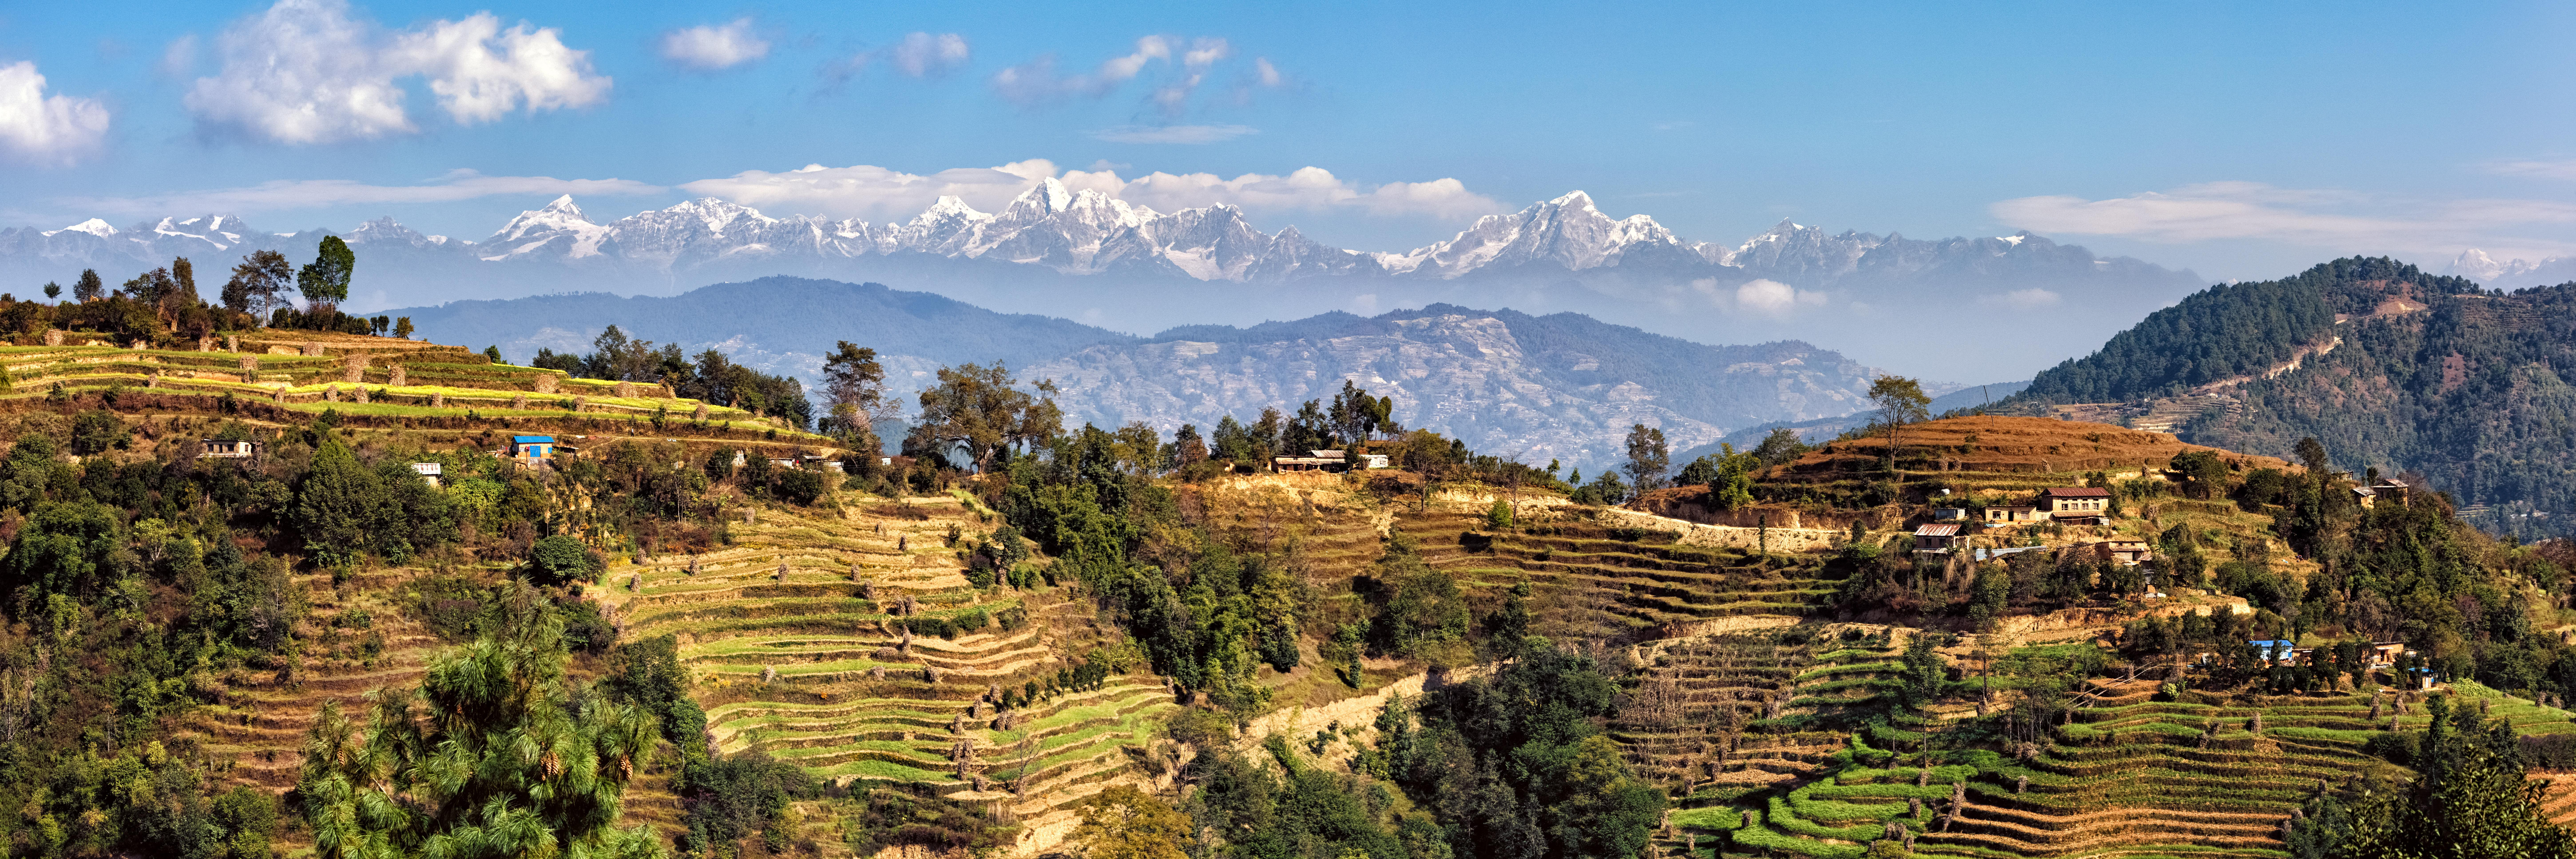 Nepal terracing